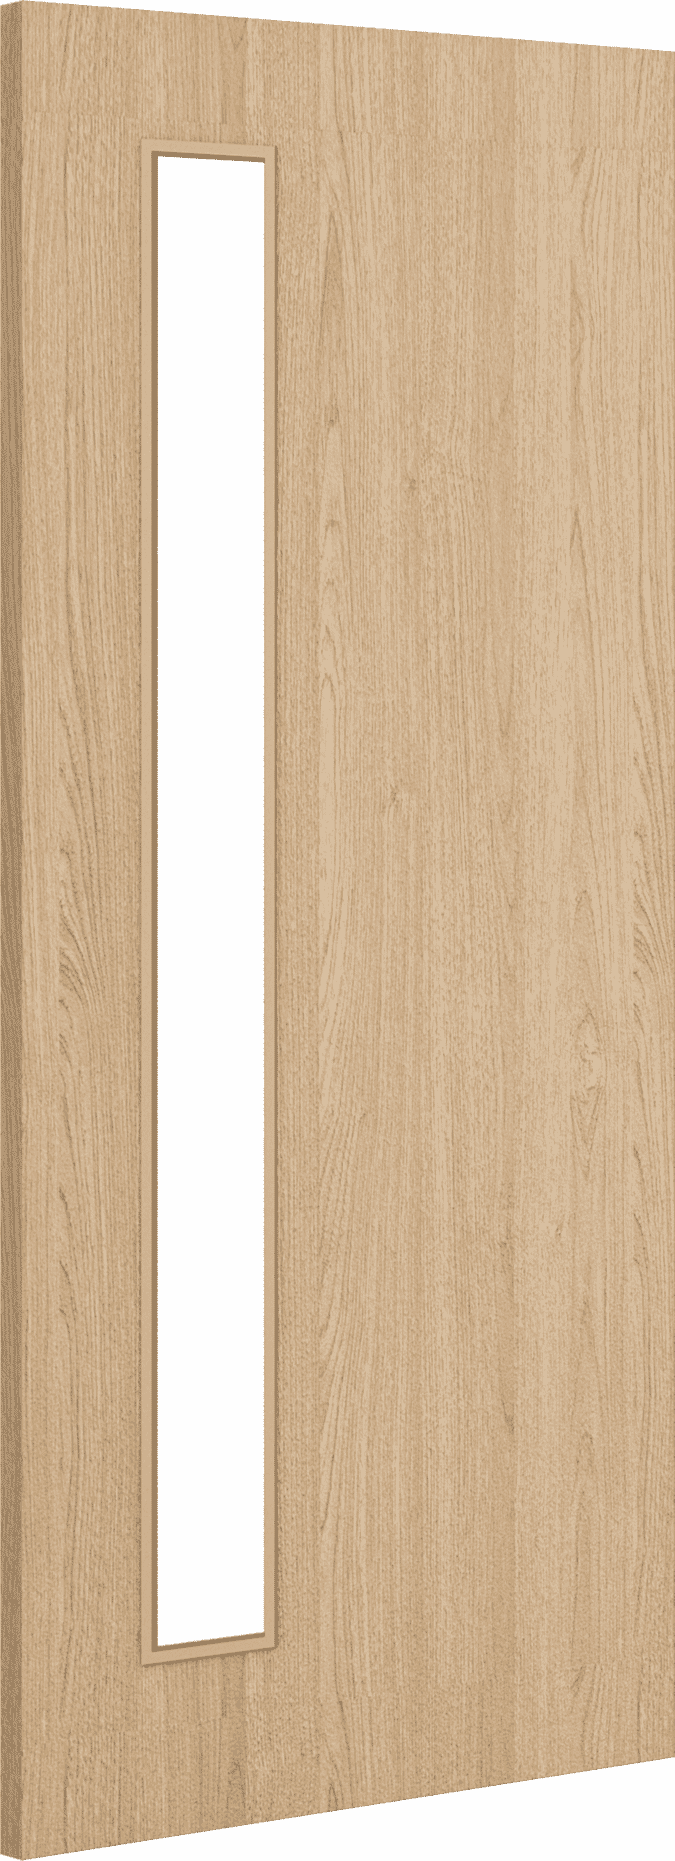 2040mm x 526mm x 44mm Architectural Oak 06 Frosted Glazed - Prefinished FD30 Fire Door Blank